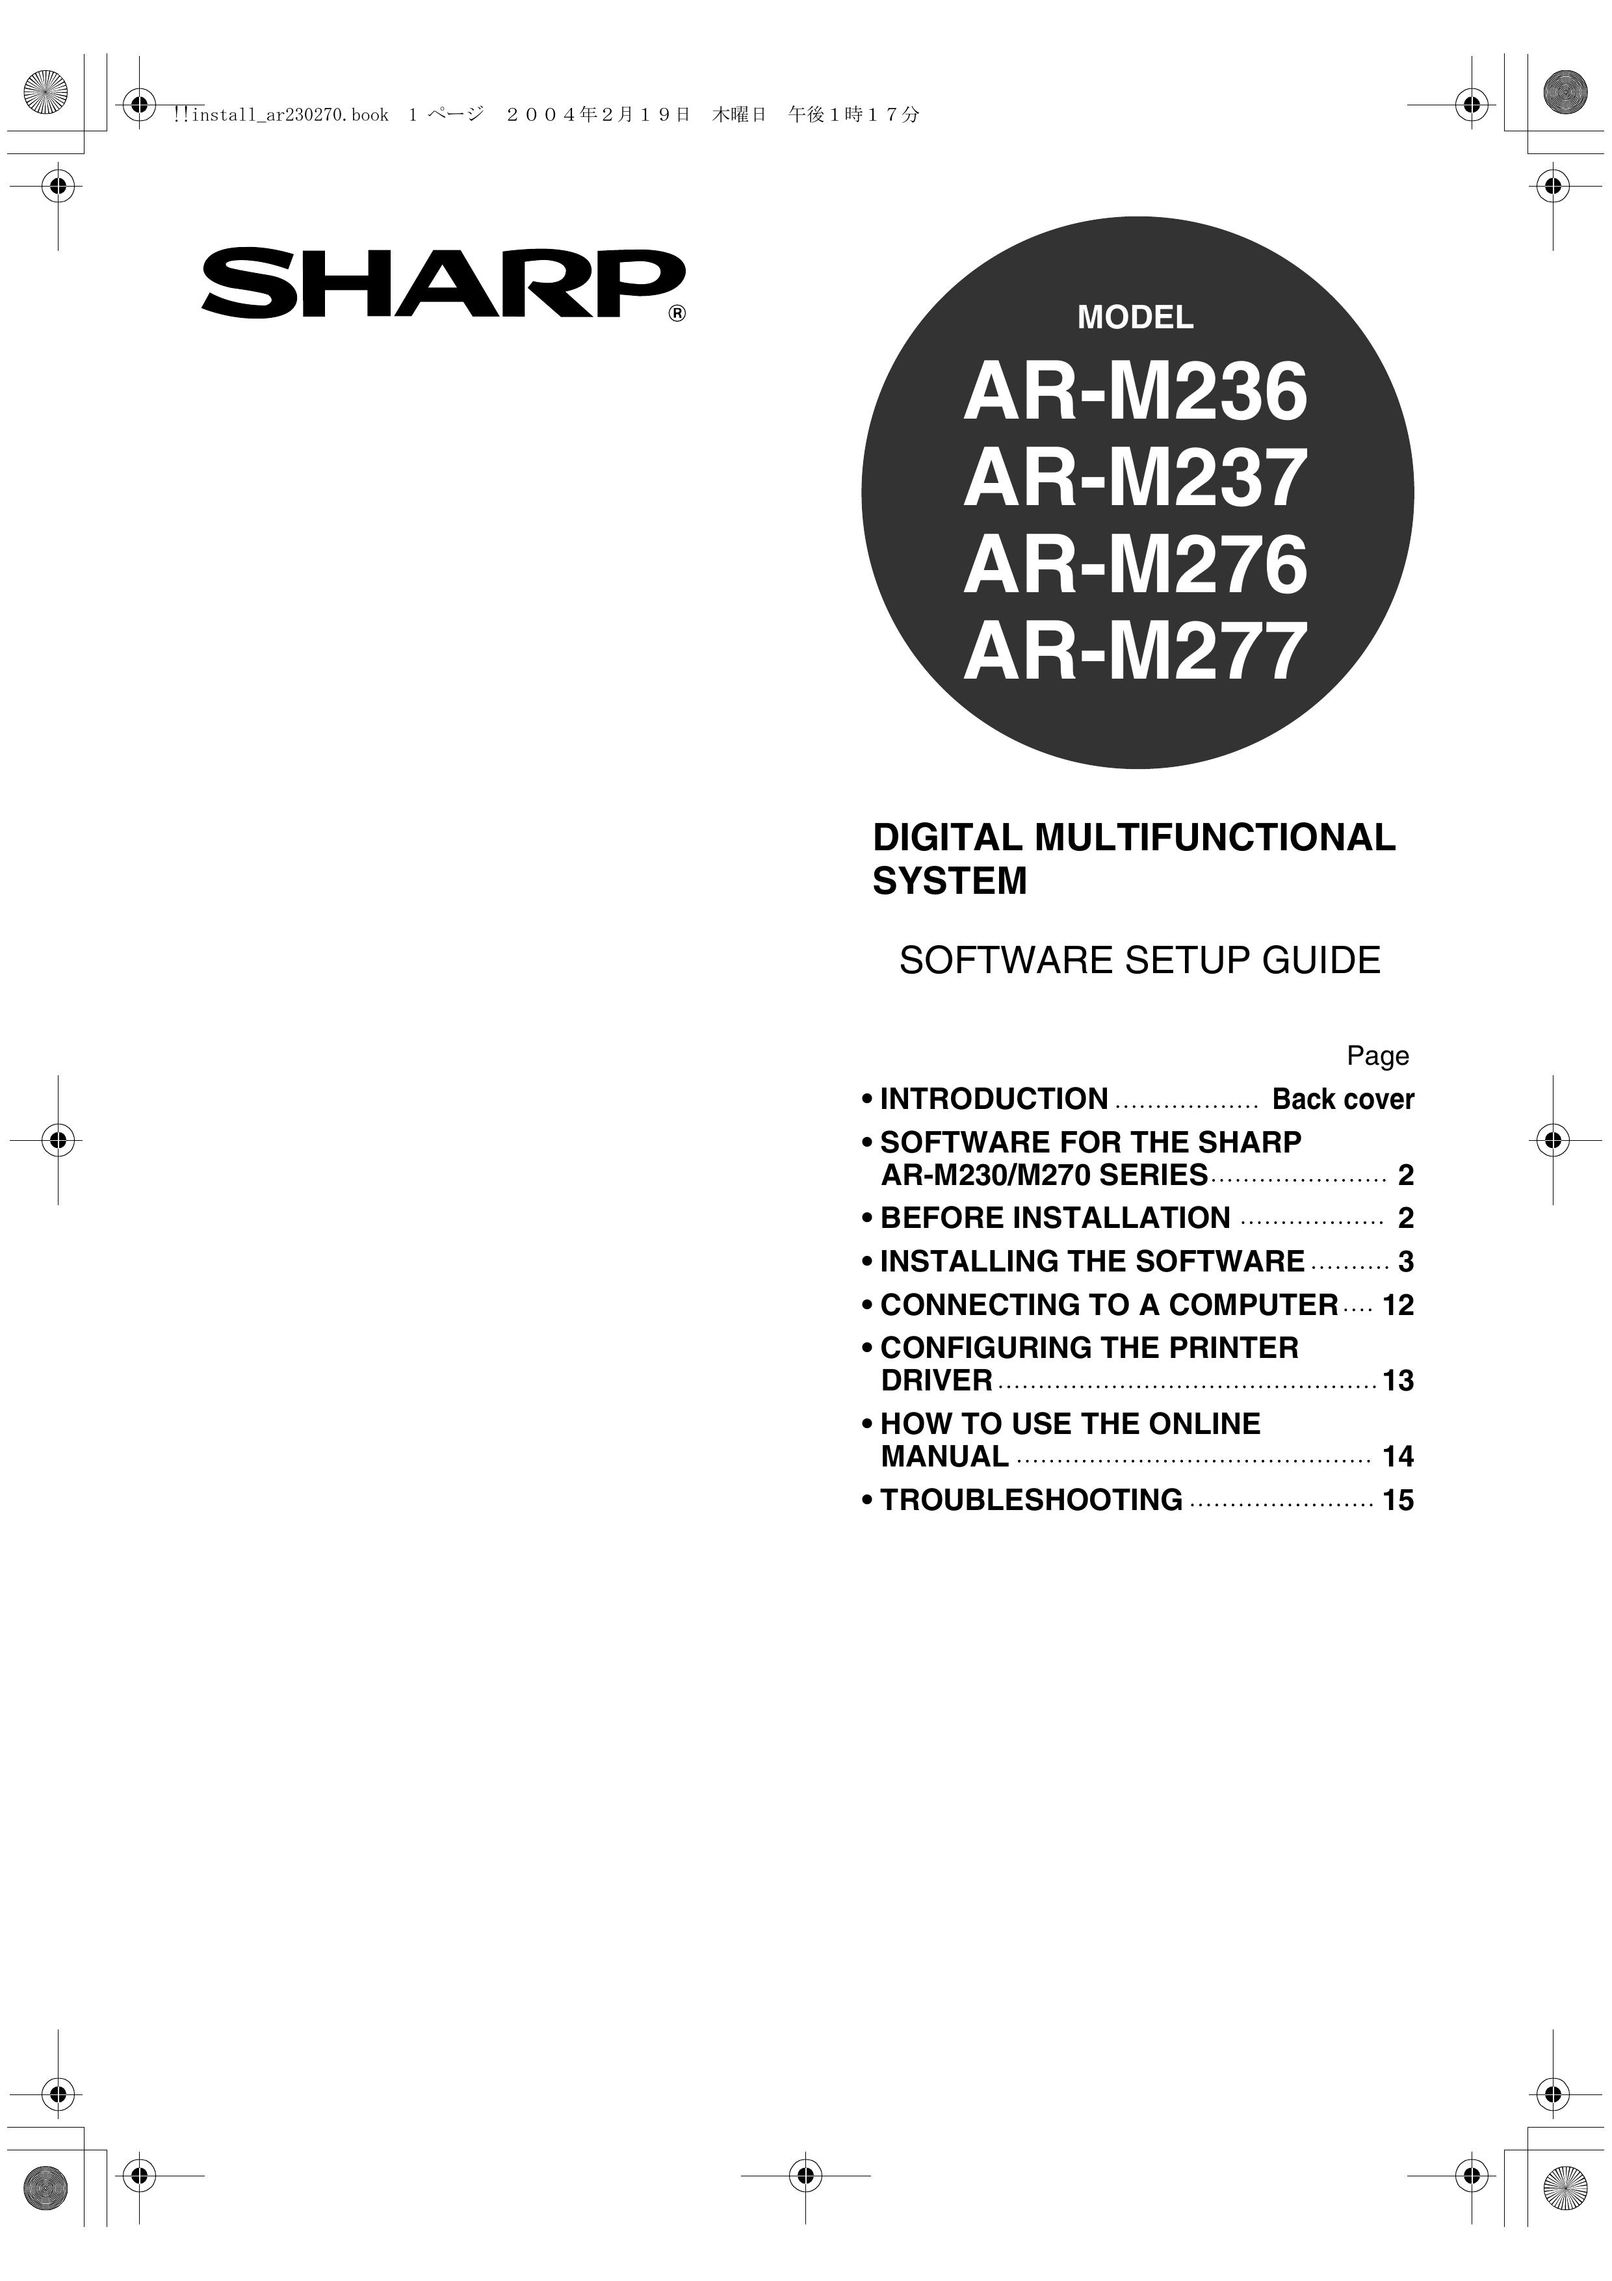 Sharp AR-M236 Fax Machine User Manual